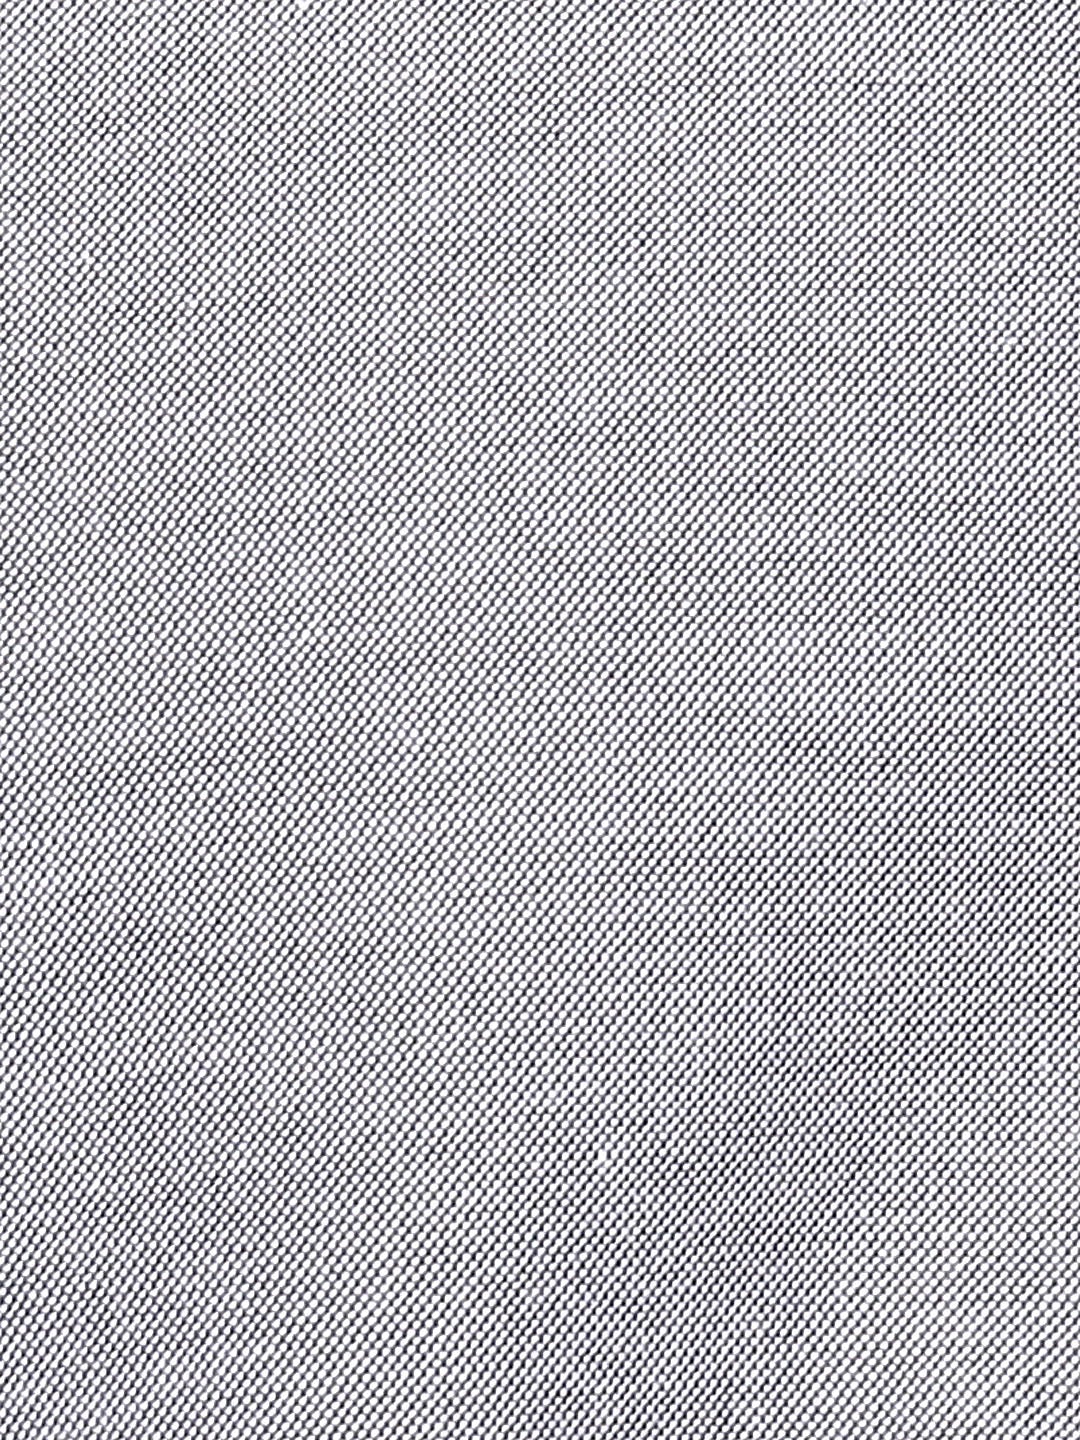 Grey Pure Cotton Shirt Kurta